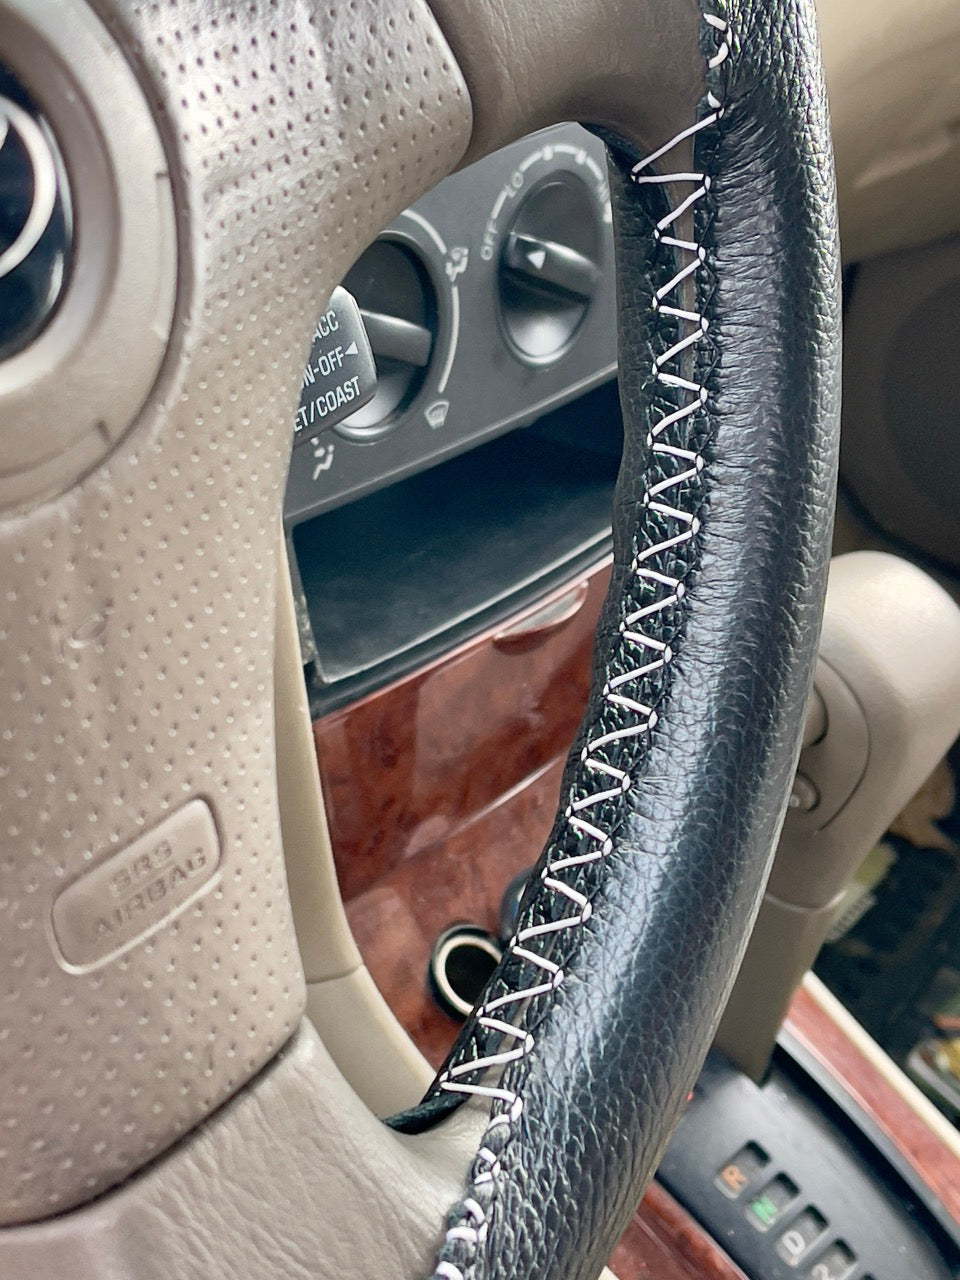 Leather Steering Wheel Cover - Black